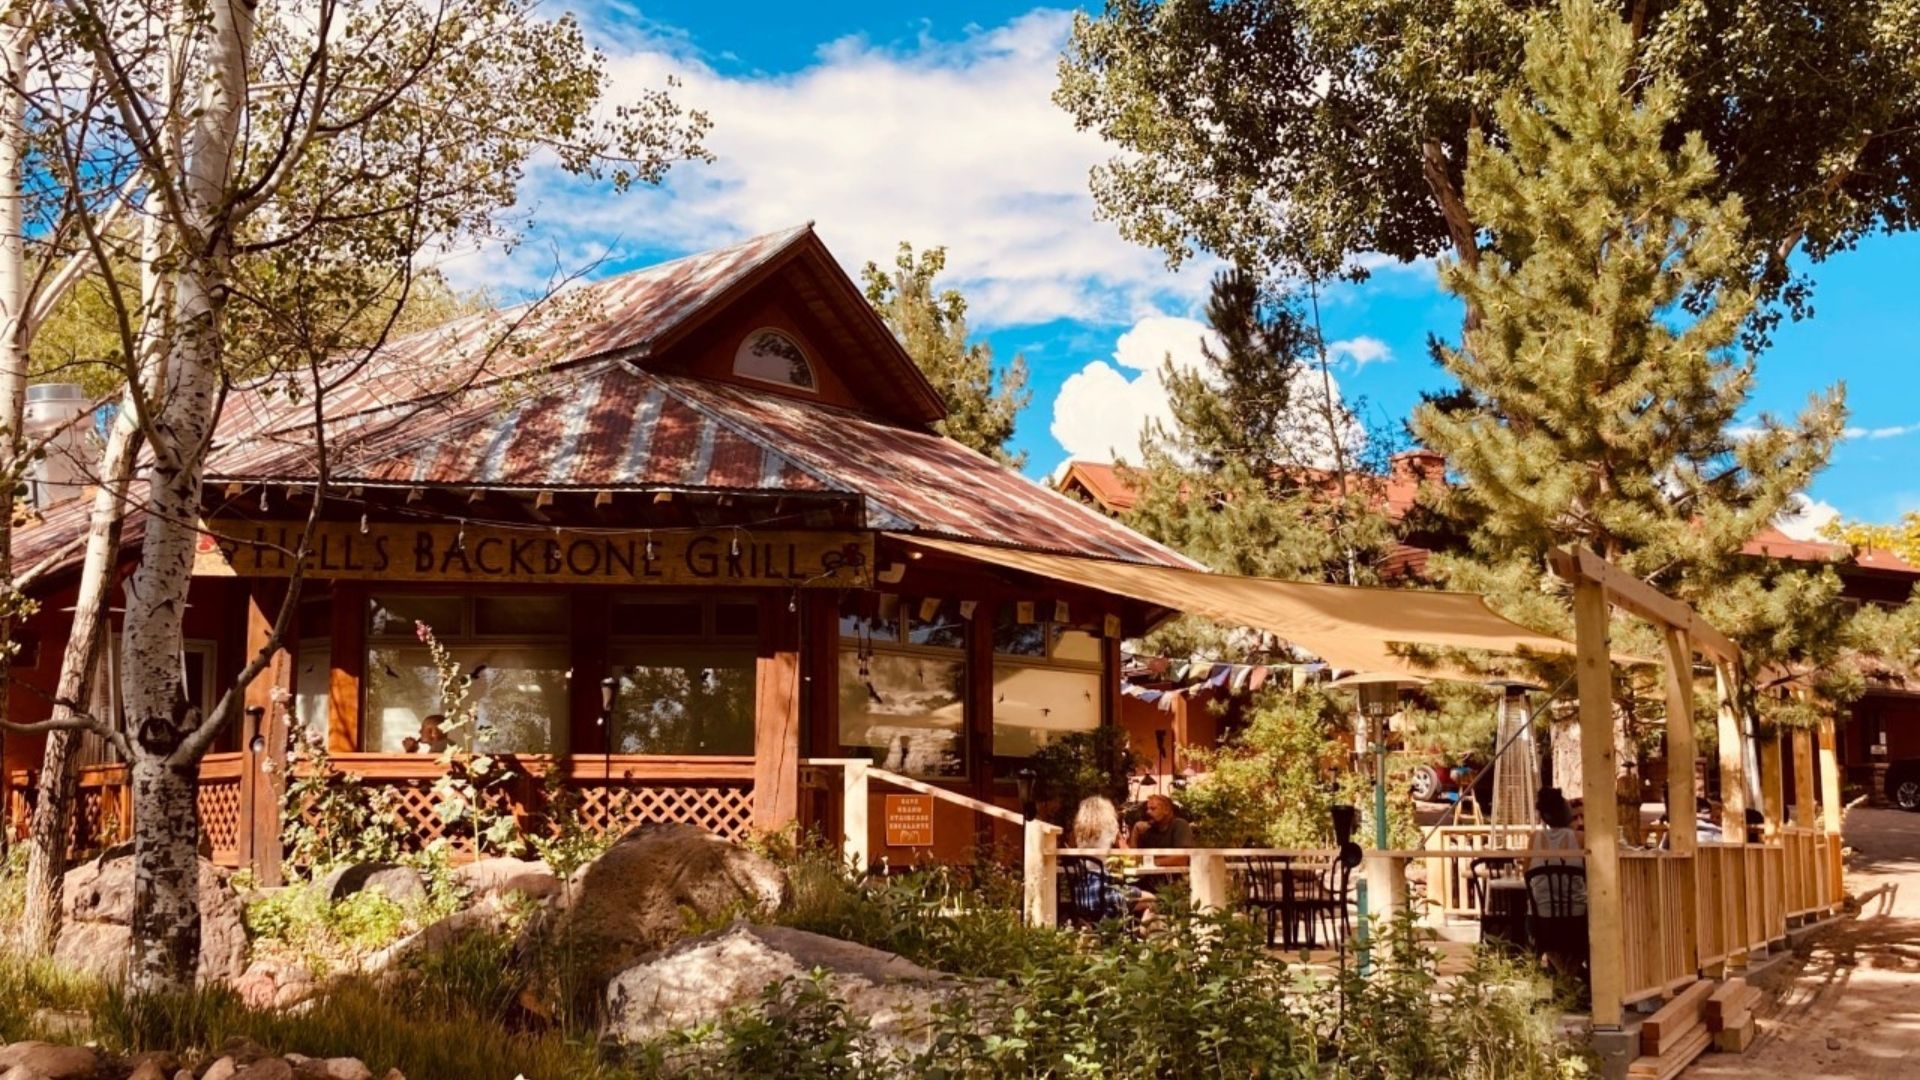 Hell's Backbone Grill, Boulder Mountain Lodge